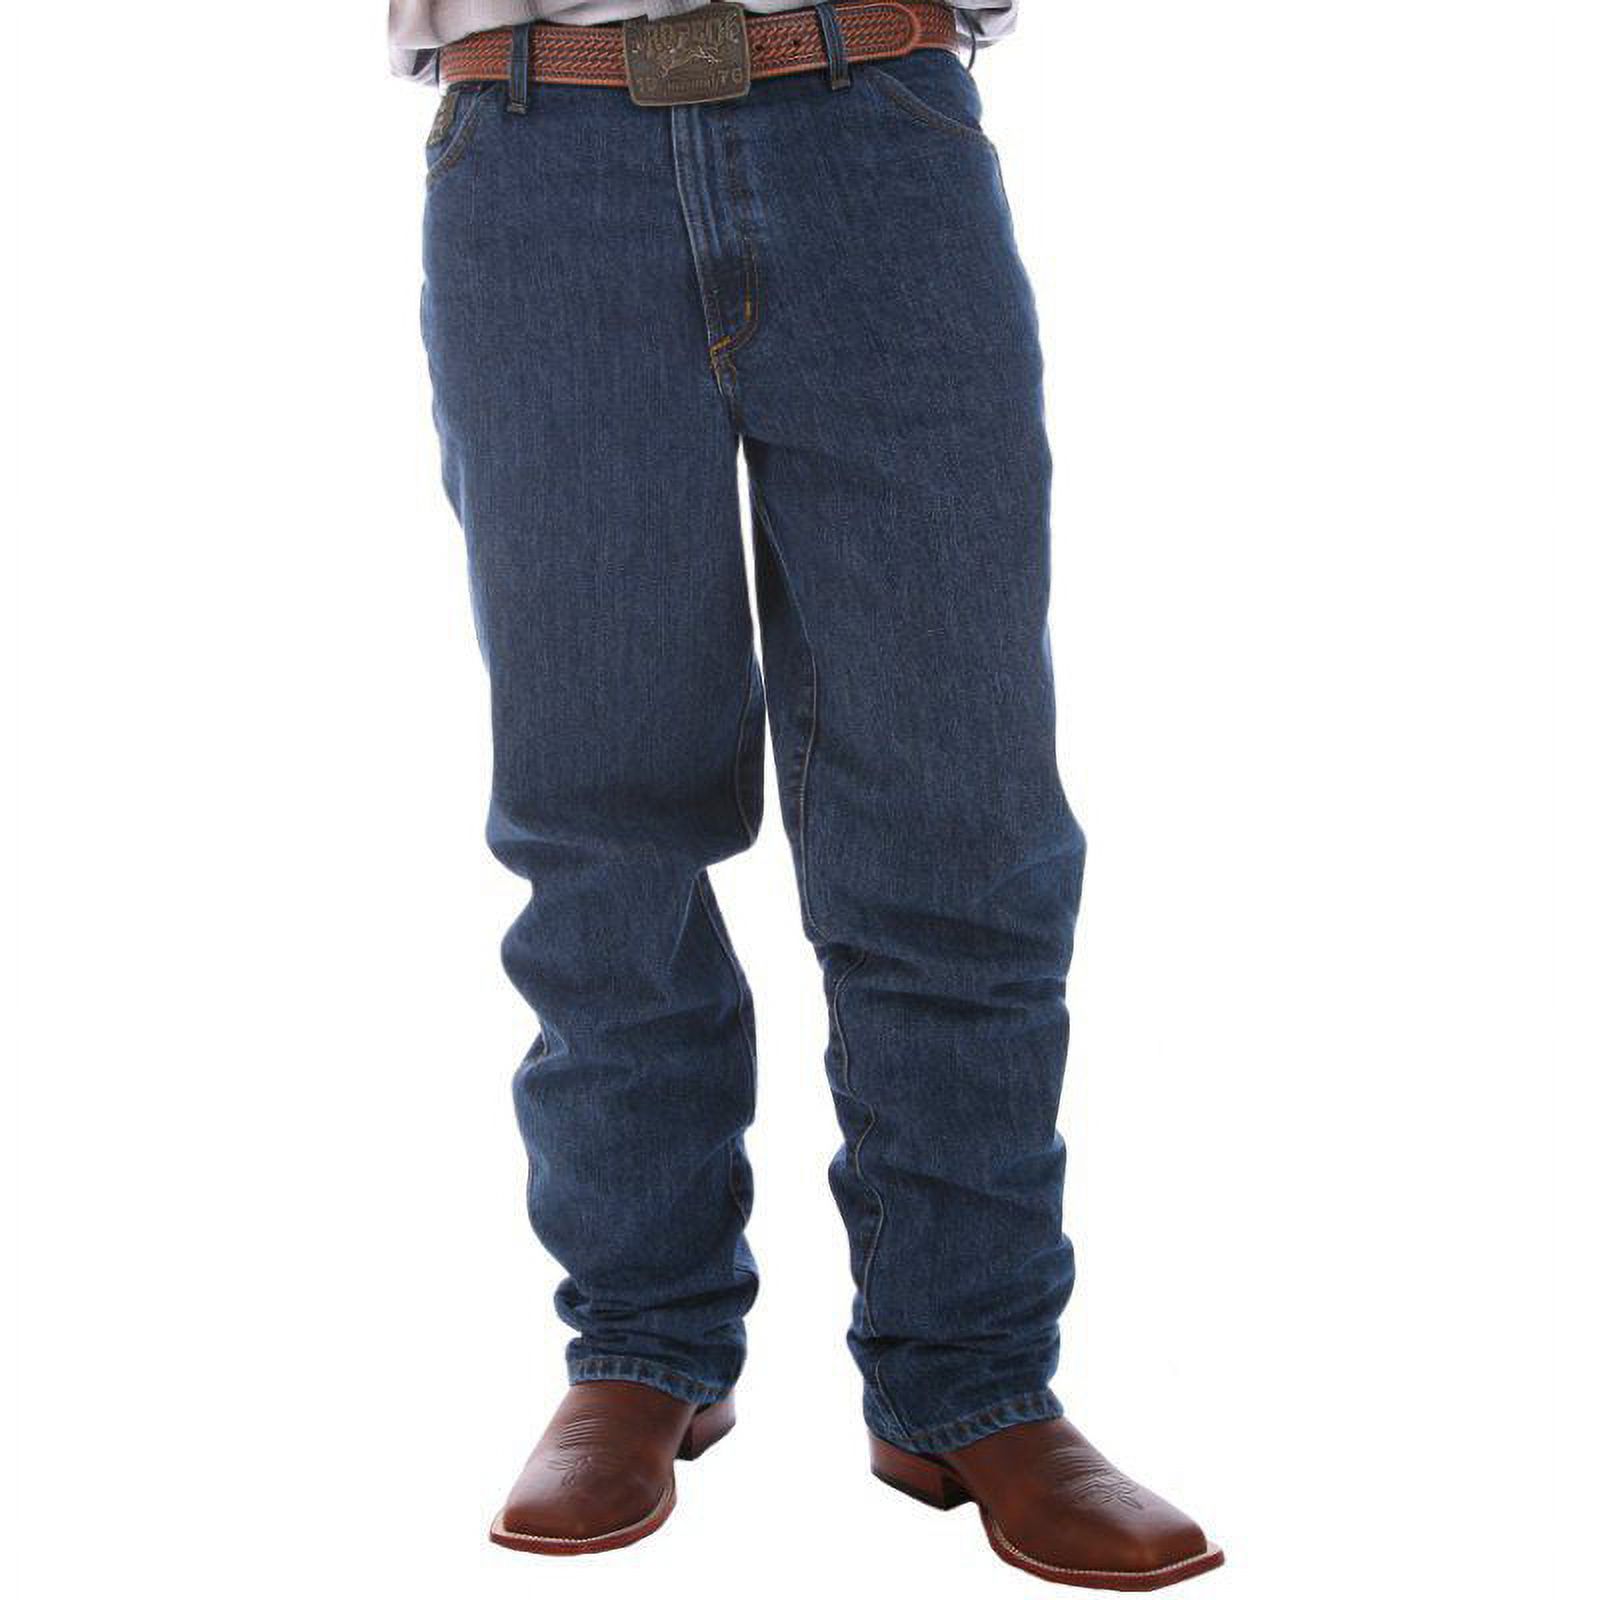 Cinch Apparel Mens Green Label Original Fit Jeans 35x30 Dark Stonewash - image 4 of 4